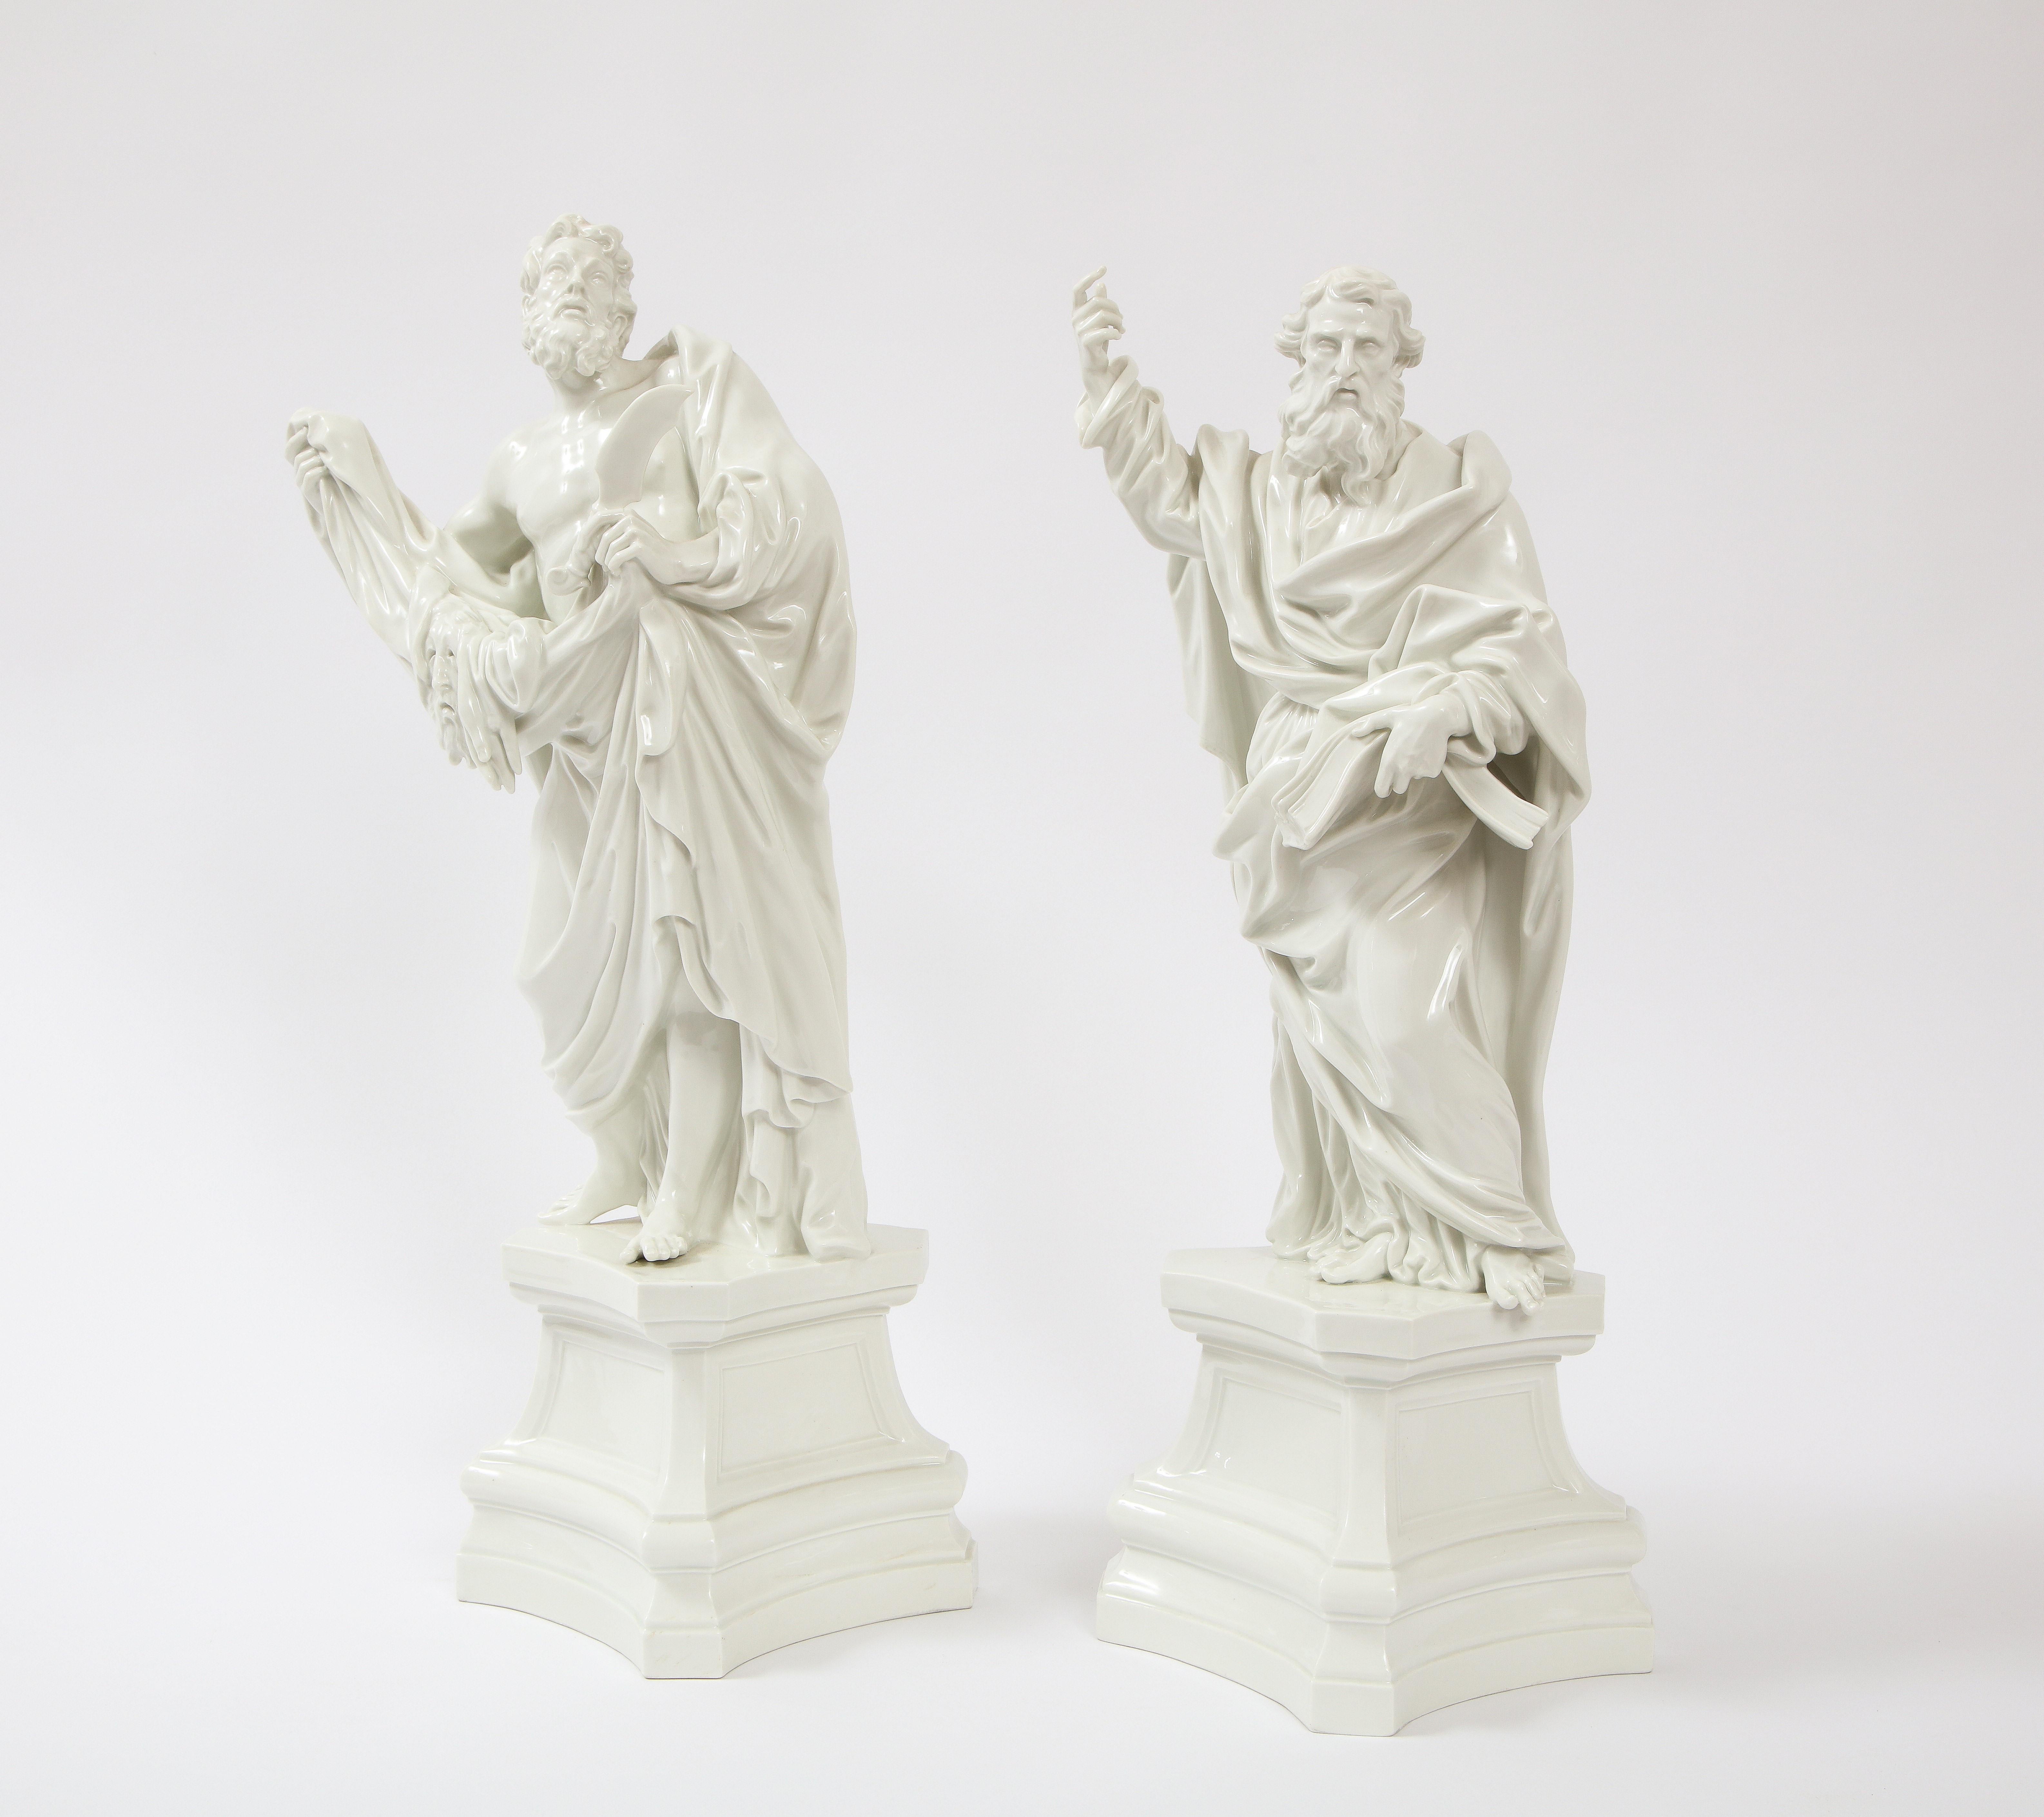 German Pr. 19th Century Meissen Porcelain White Altar Figures of St. James & St. Paul For Sale